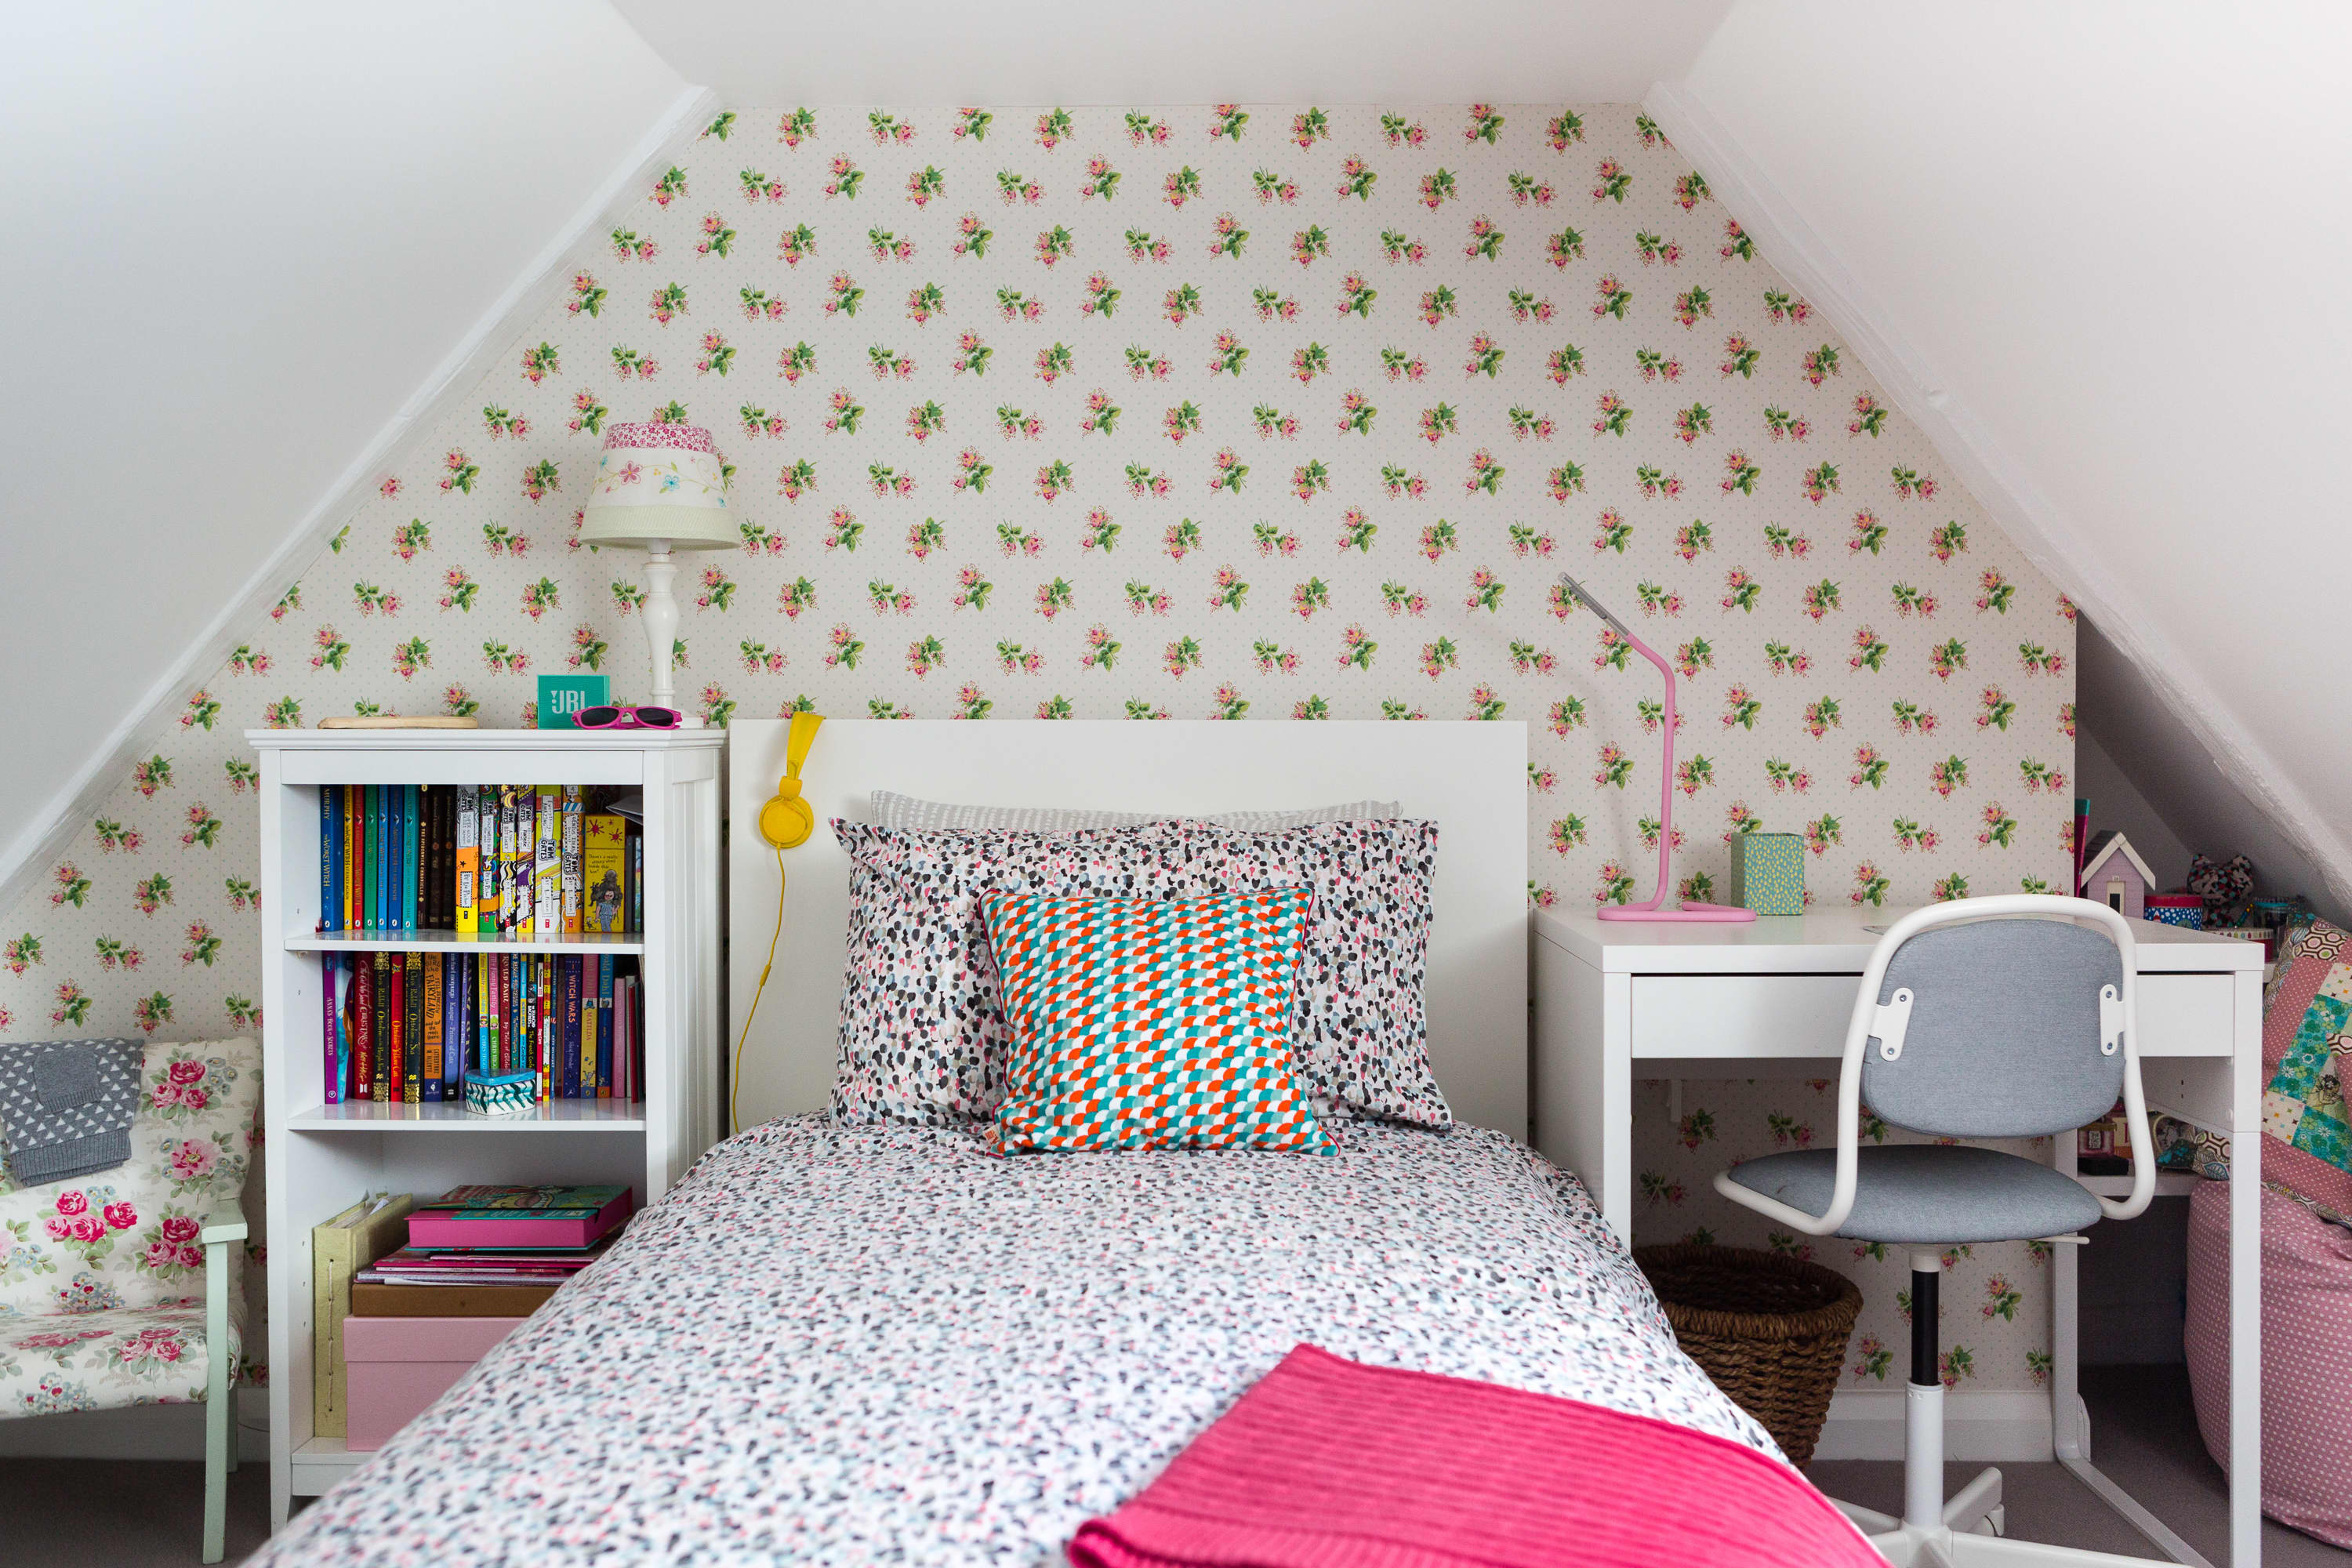 Wallpaper girl TikTok trend | Apartment Therapy